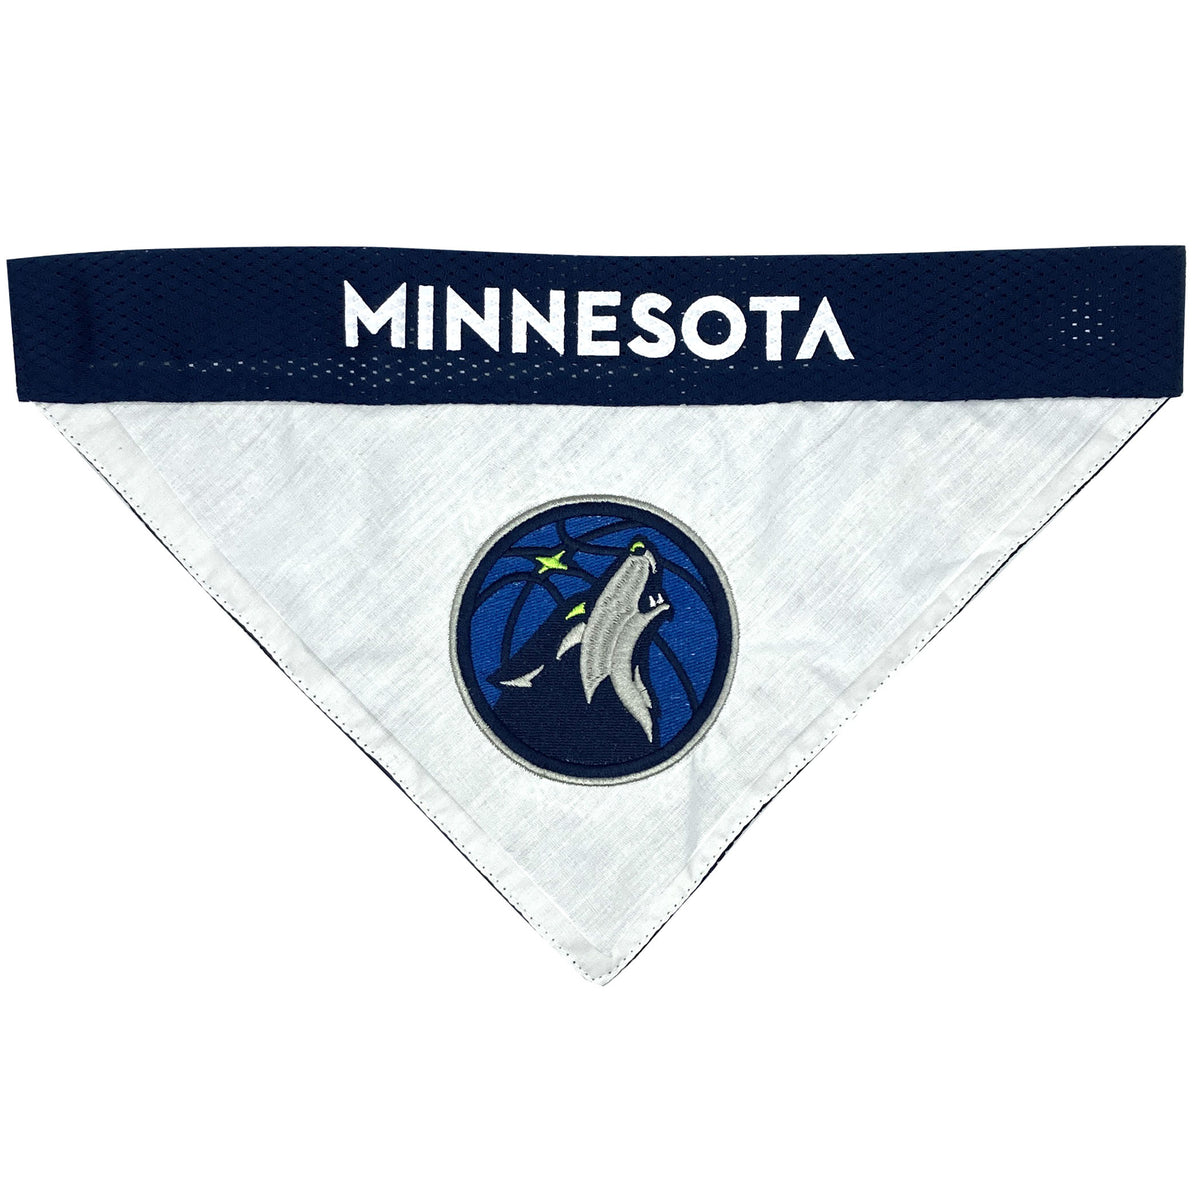 Minnesota Timberwolves Reversible Slide-On Bandana